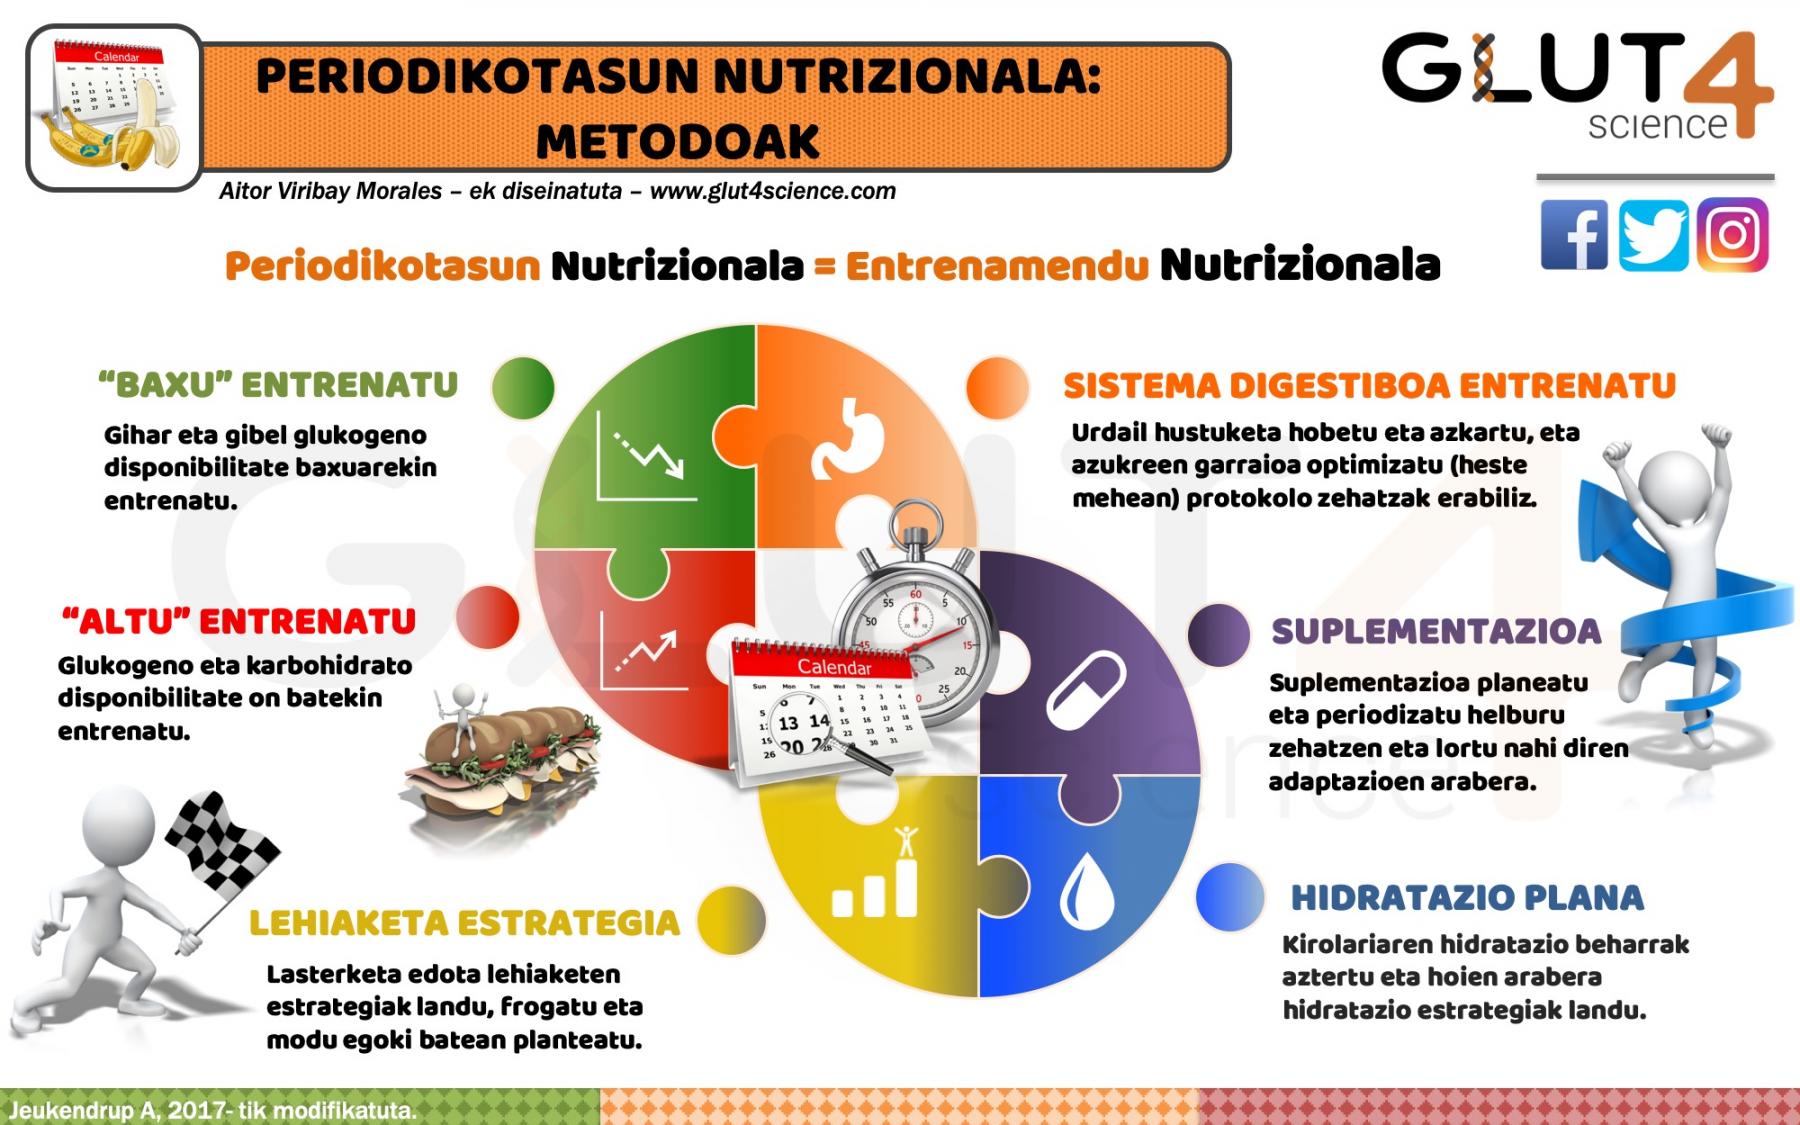 Periodikotasun Nutrizionala Kirolean: Metodoak